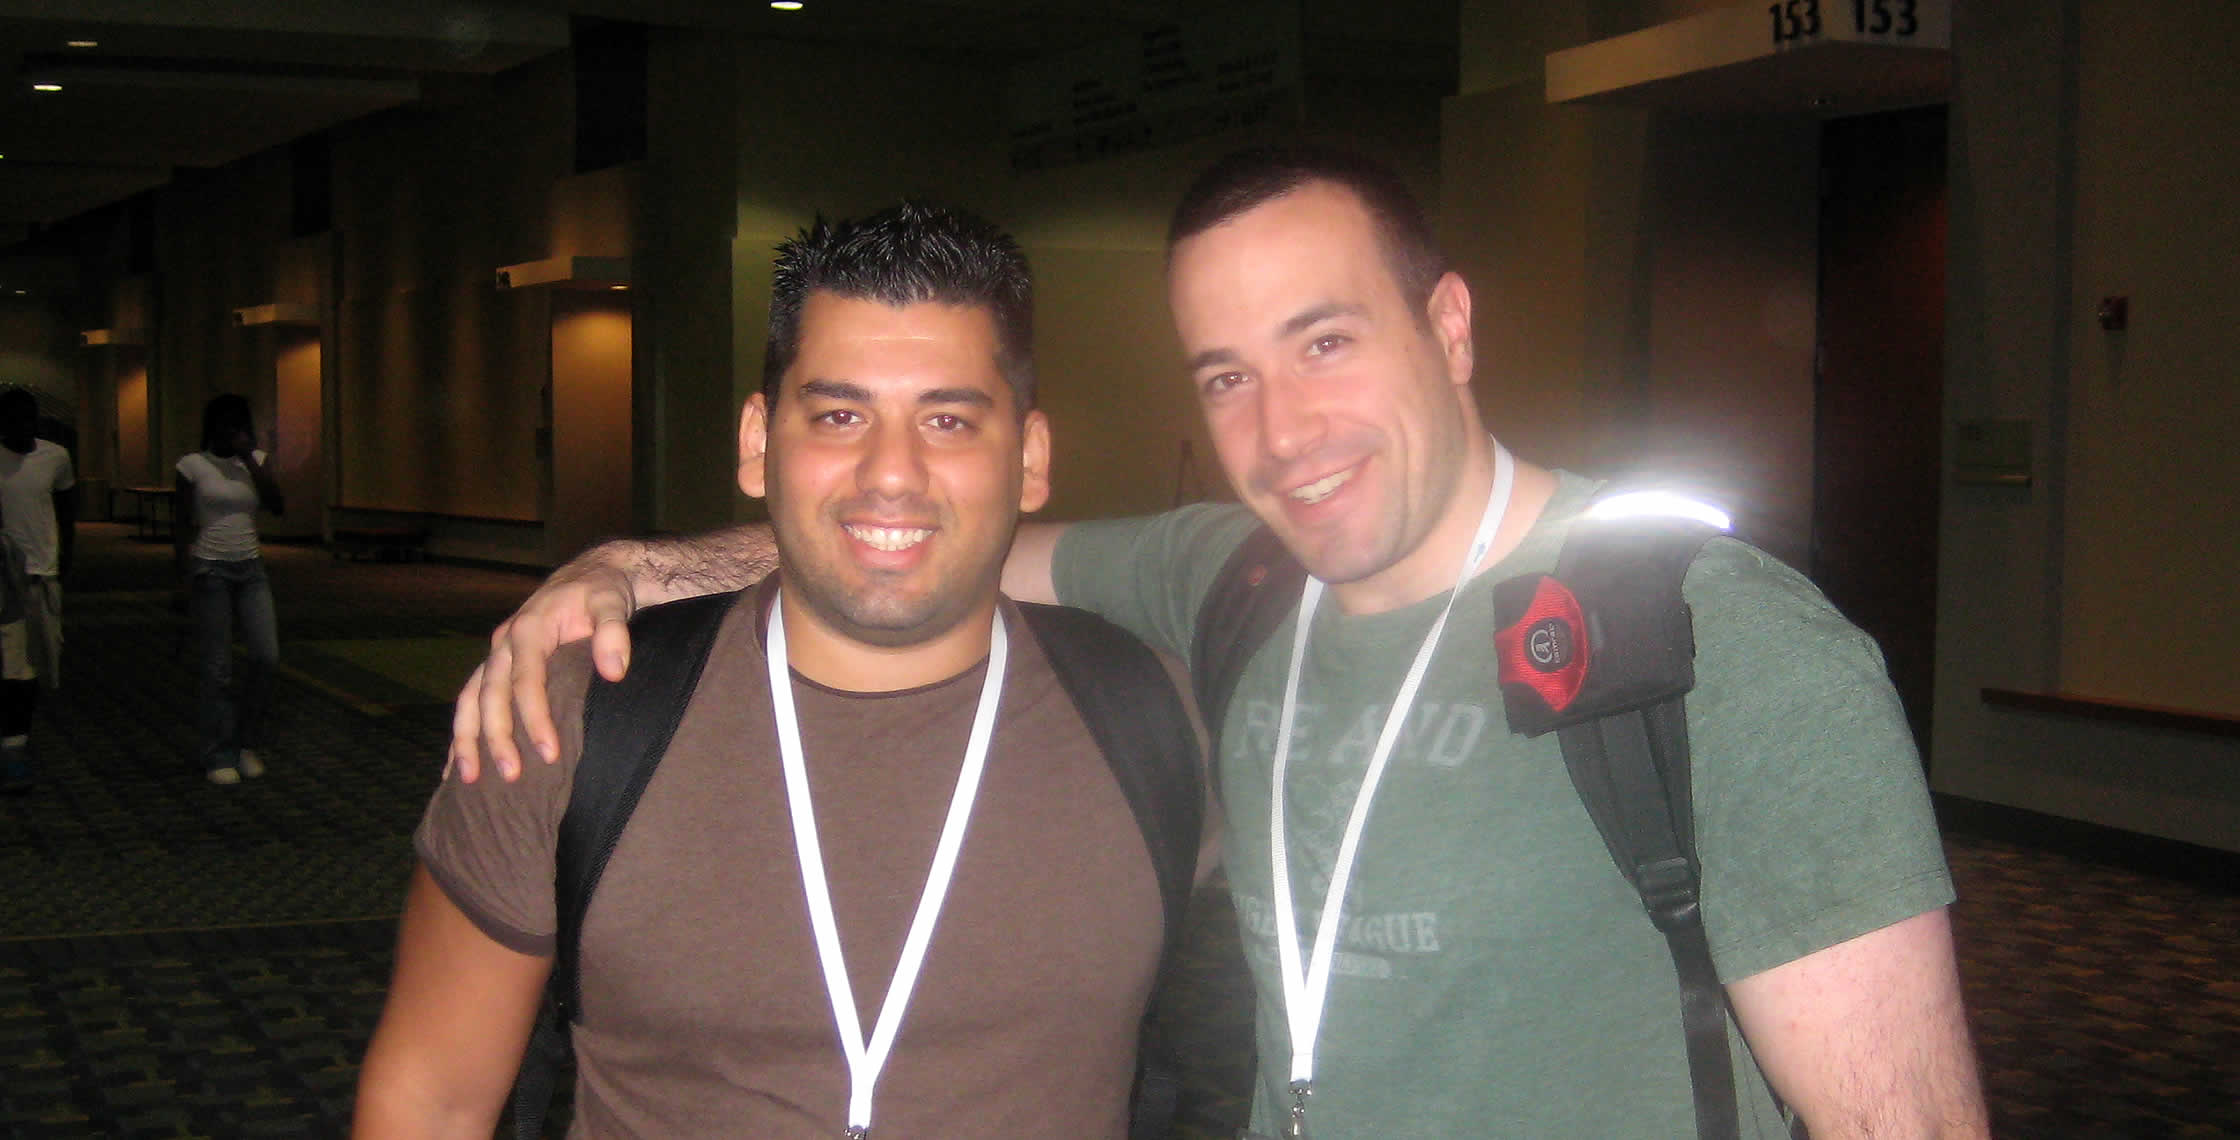 Ben Nadel at CFUNITED 2008 (Washington, D.C.) with: Yaron Kohn